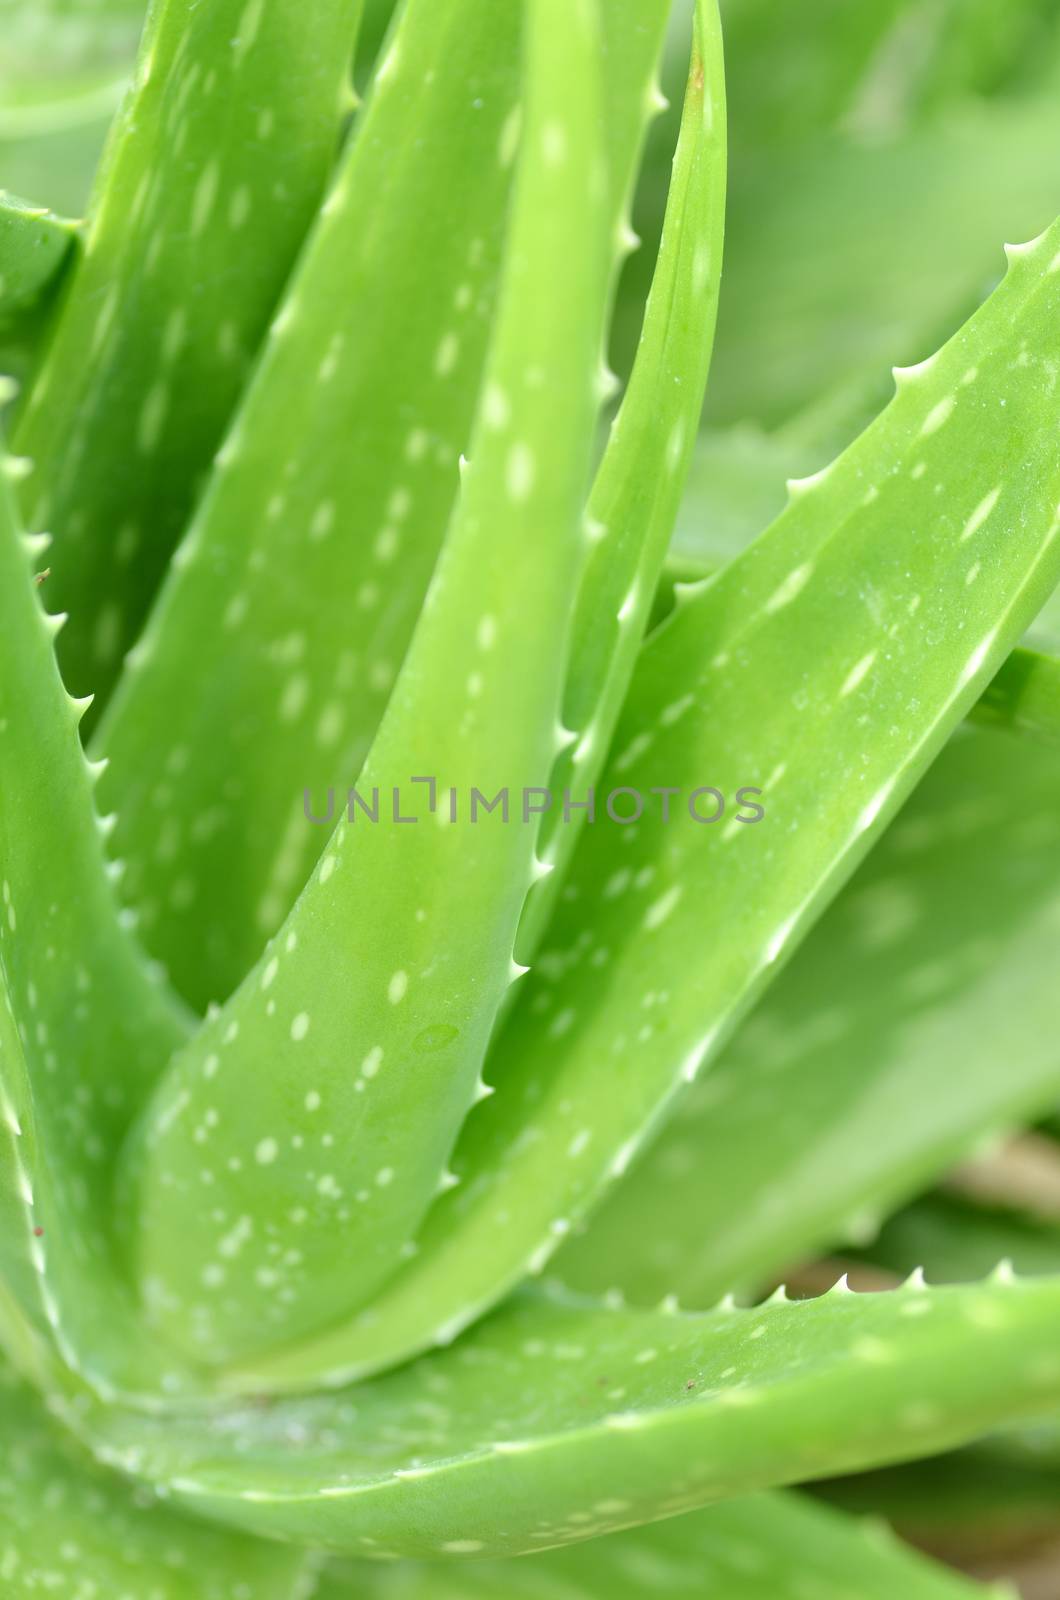 Aloe vera plate by tang90246